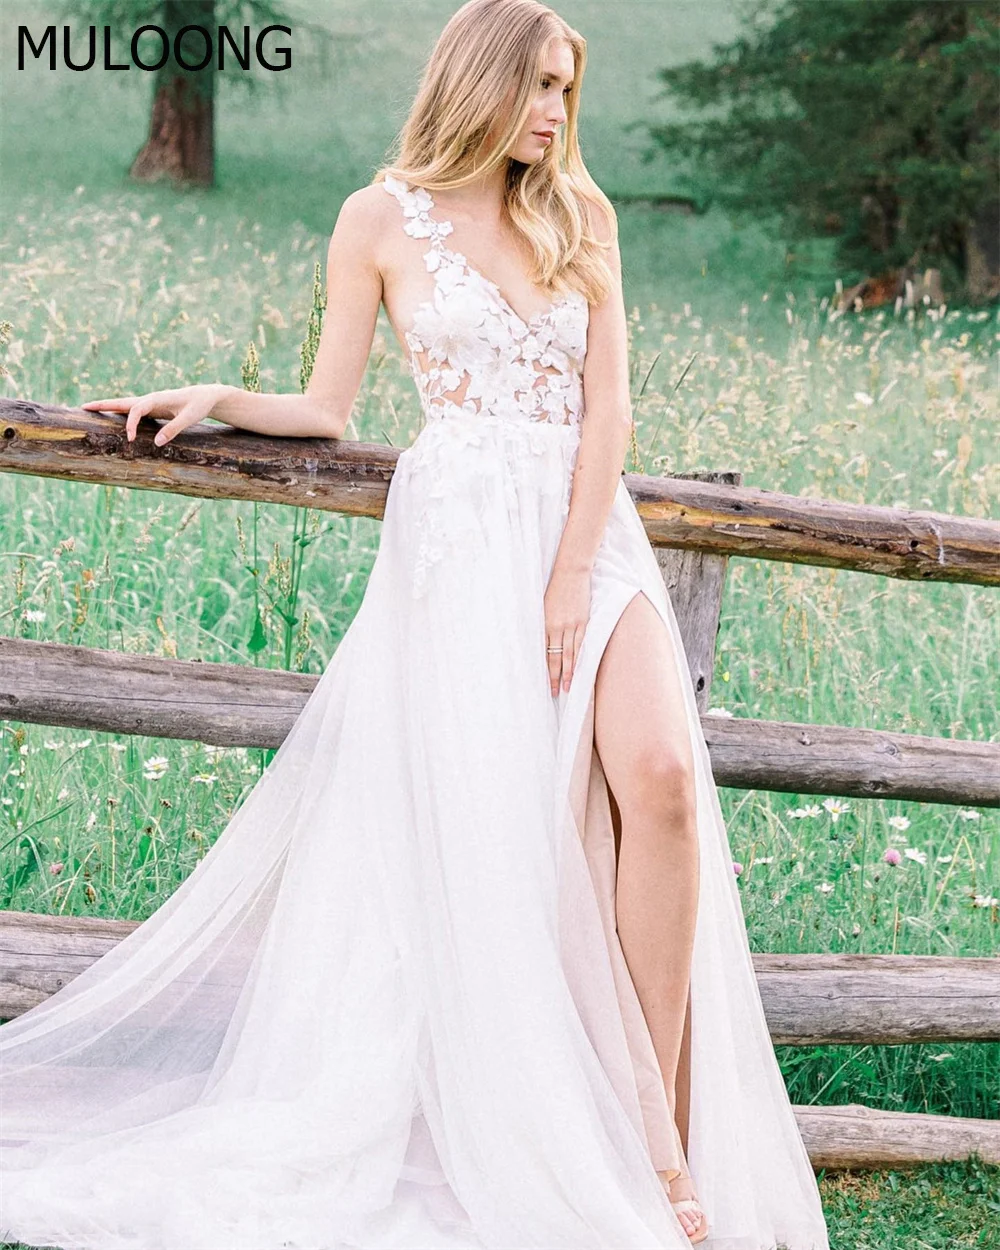 

MULOONG Elegant White Sleeveless Lace Appliques V Neck Spaghetti Strap A Line Wedding Dress High Side Slit Floor Length Gown New